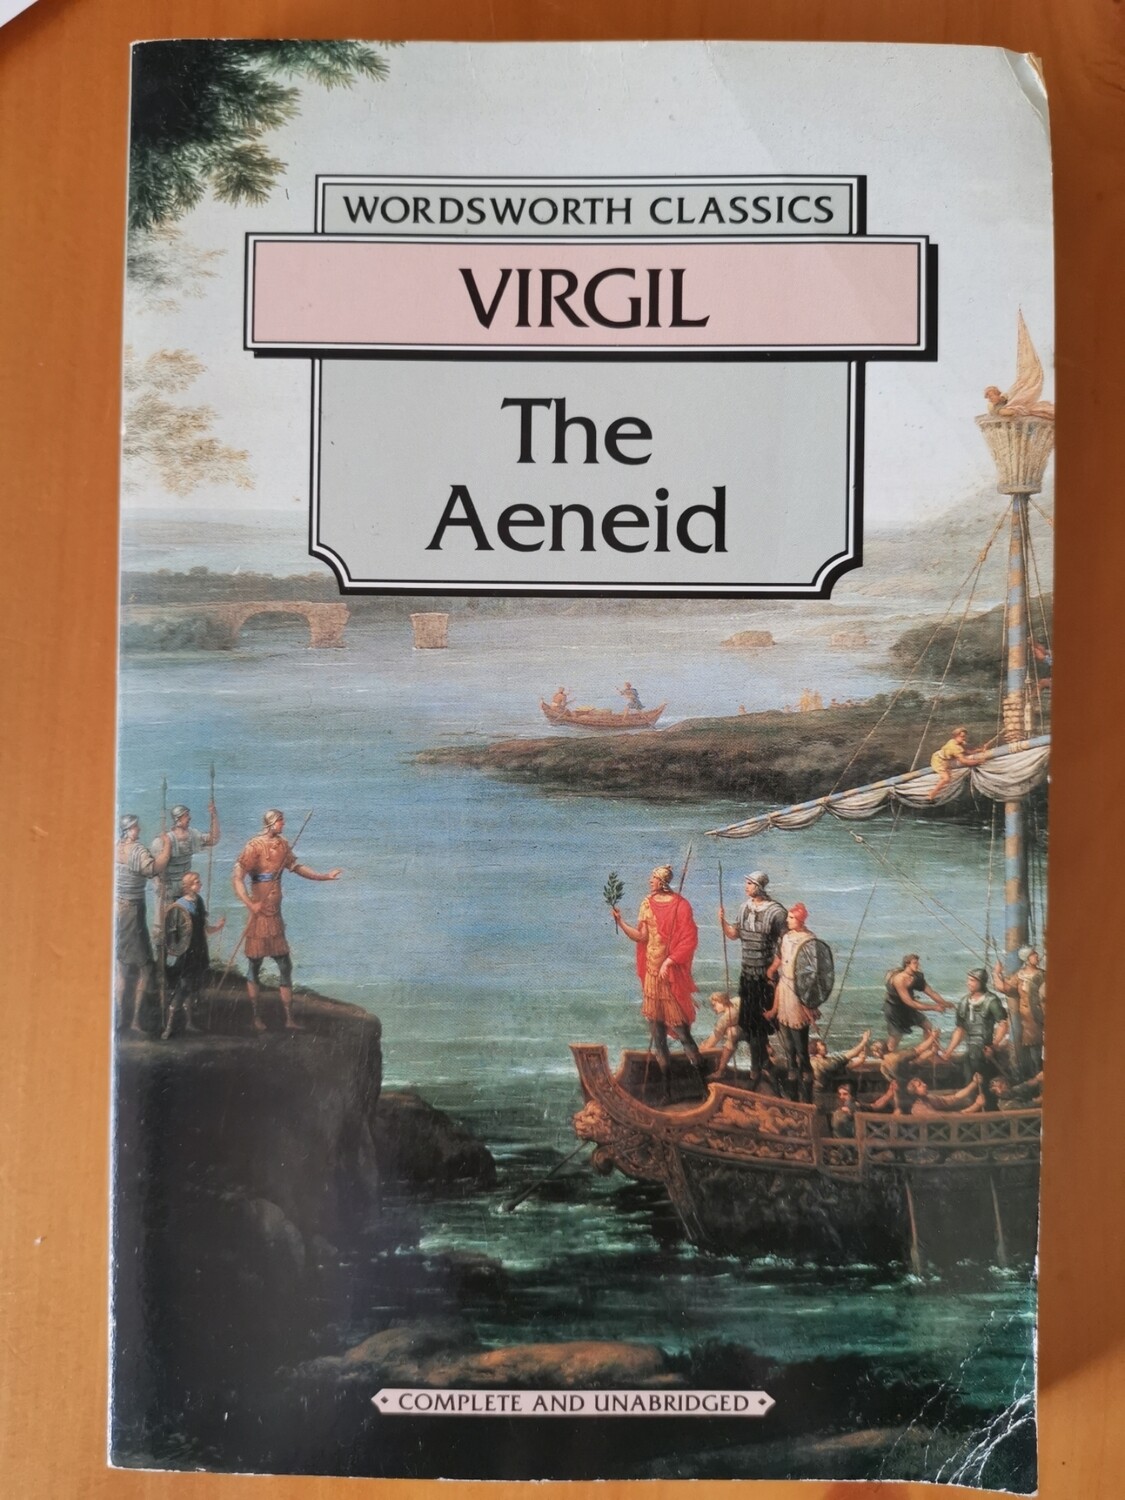 The aeneid, Virgil